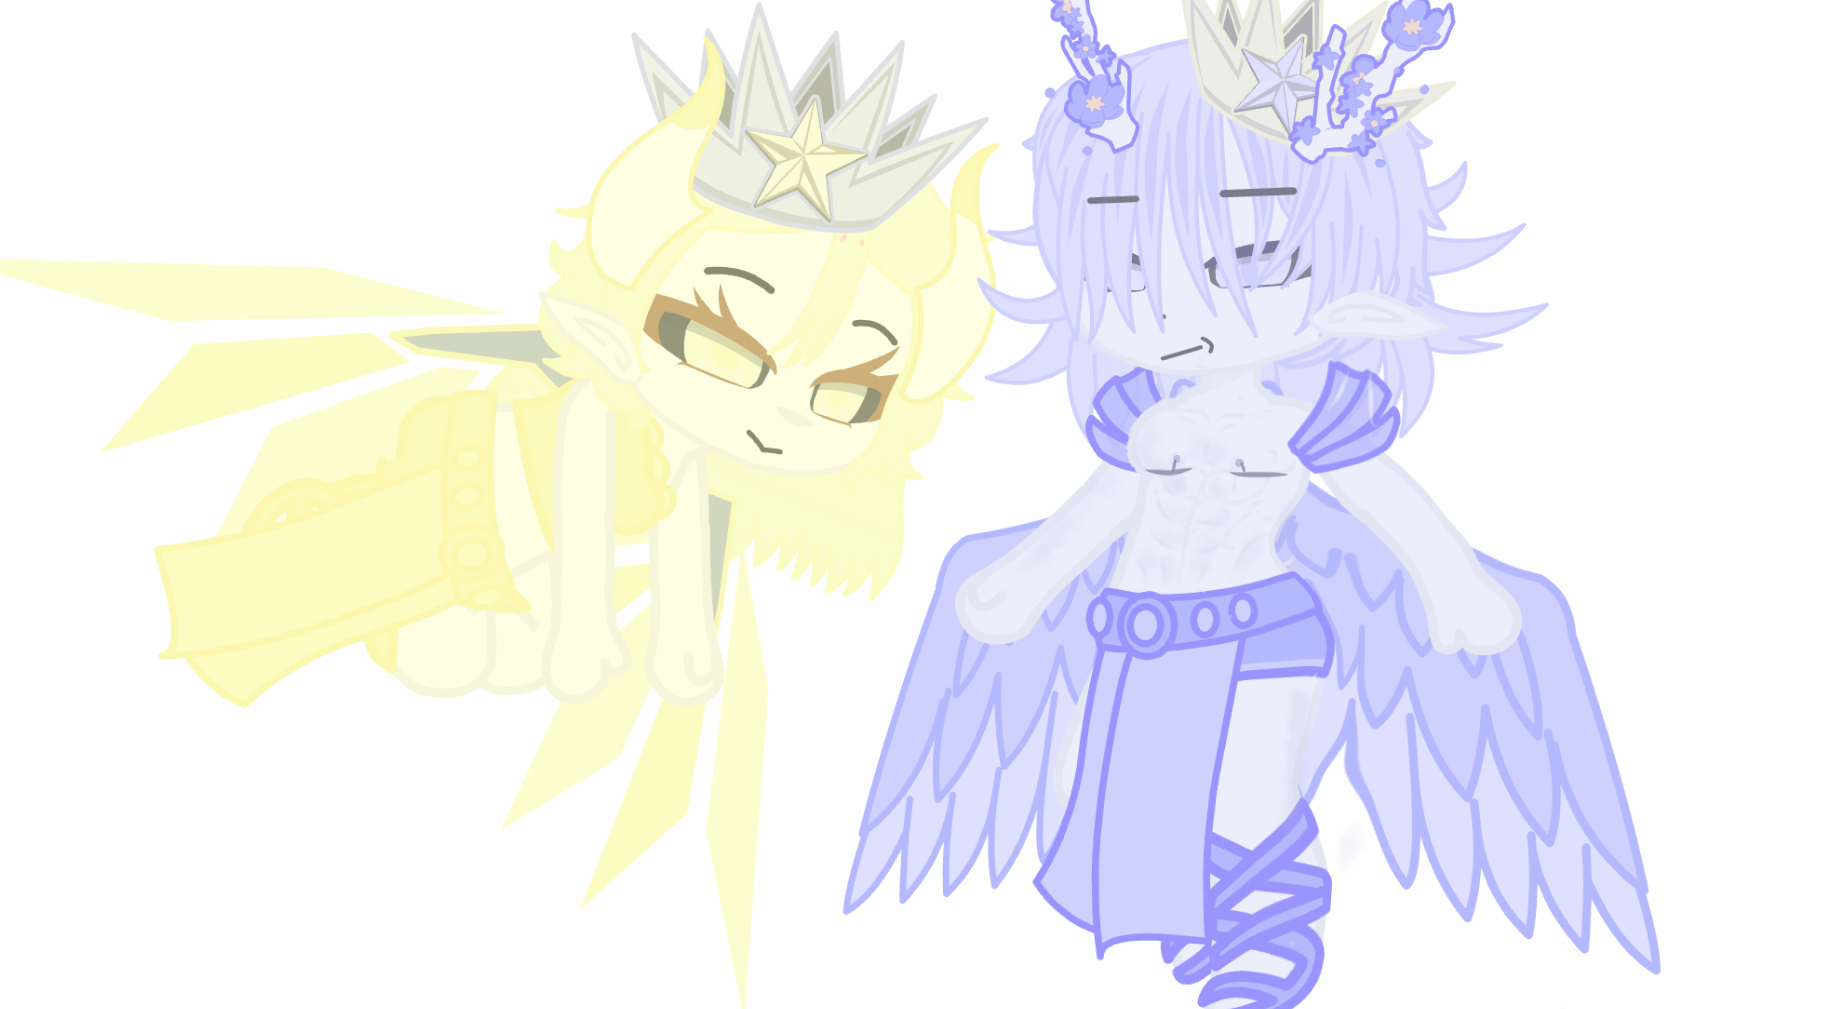 Meet my god ocs Cyrius(lavender)and Kcyuriua(yellow)